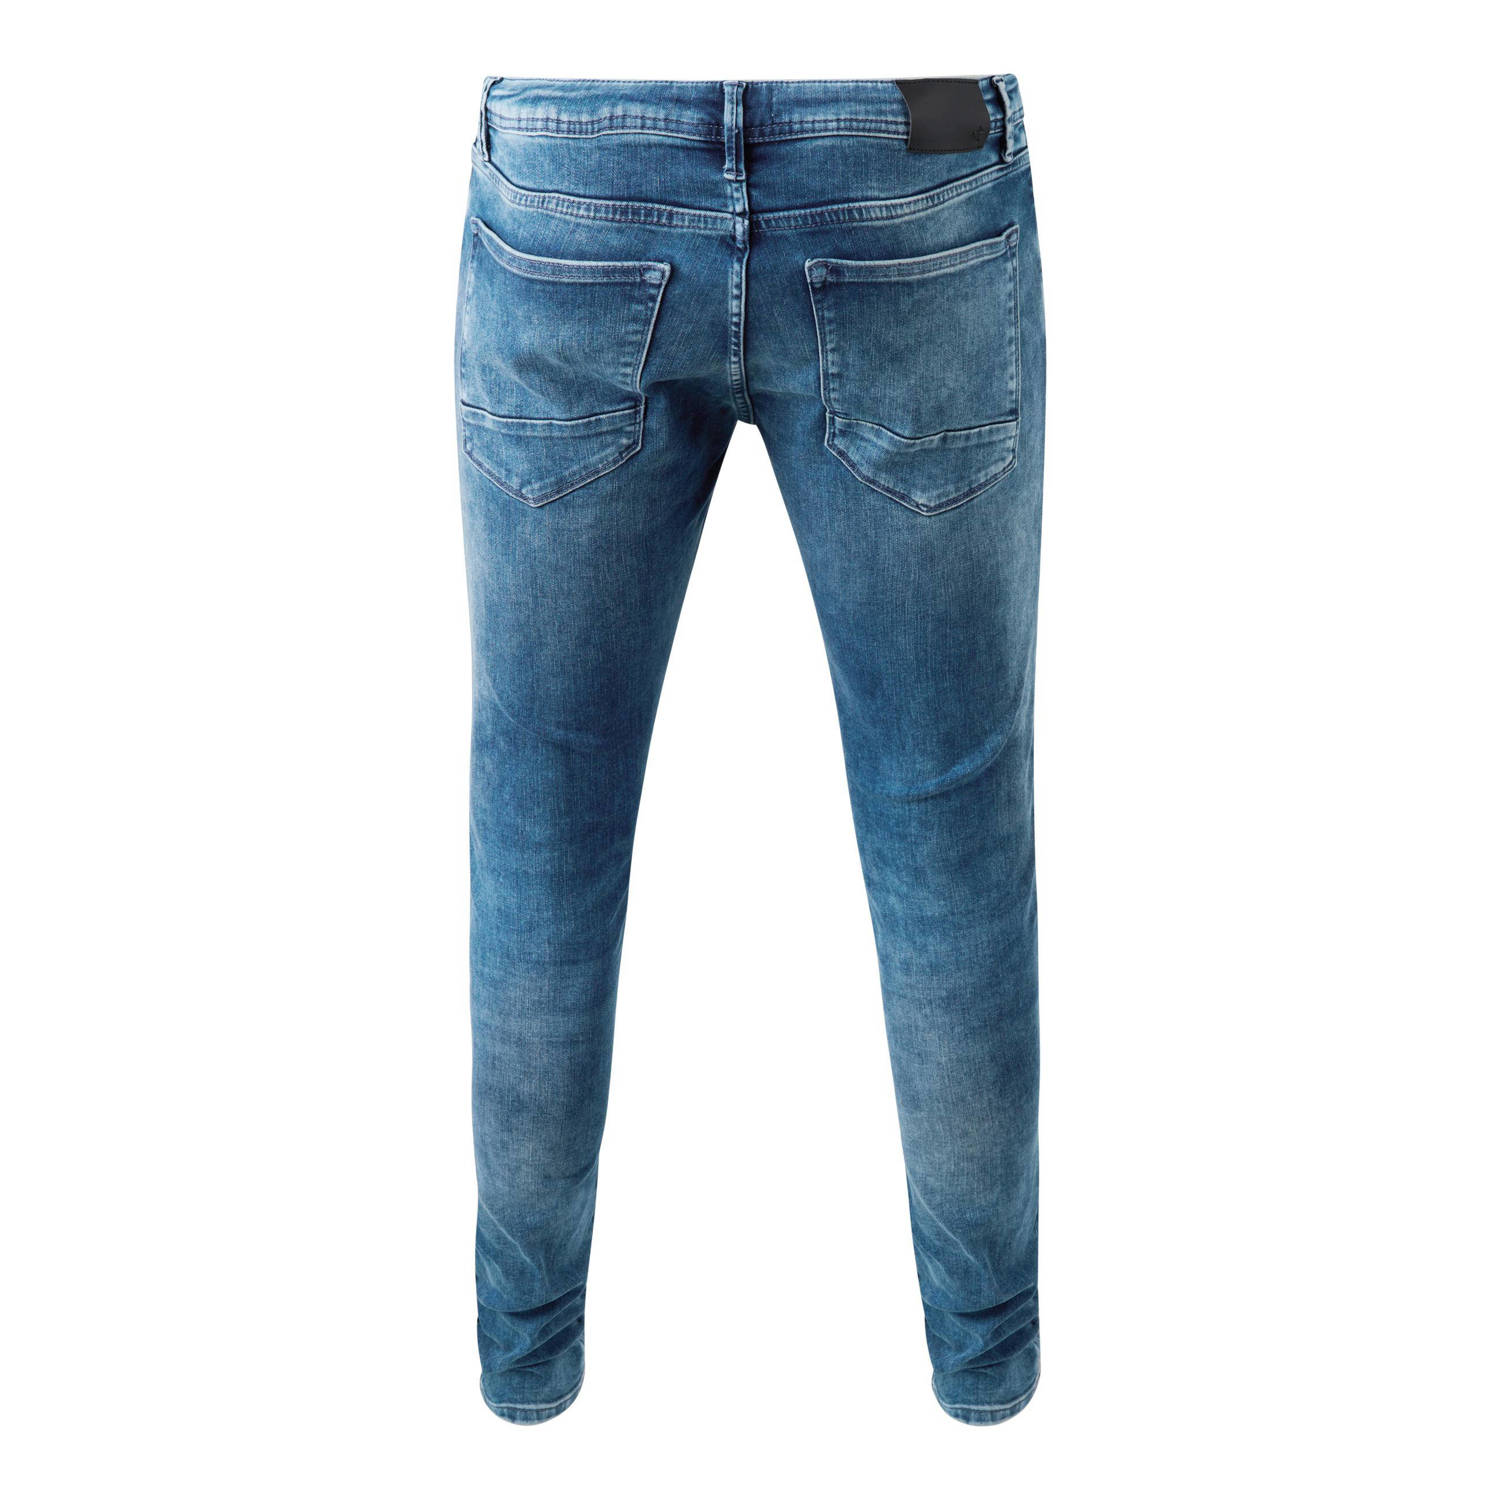 Shoeby skinny L30 jeans mediumstone